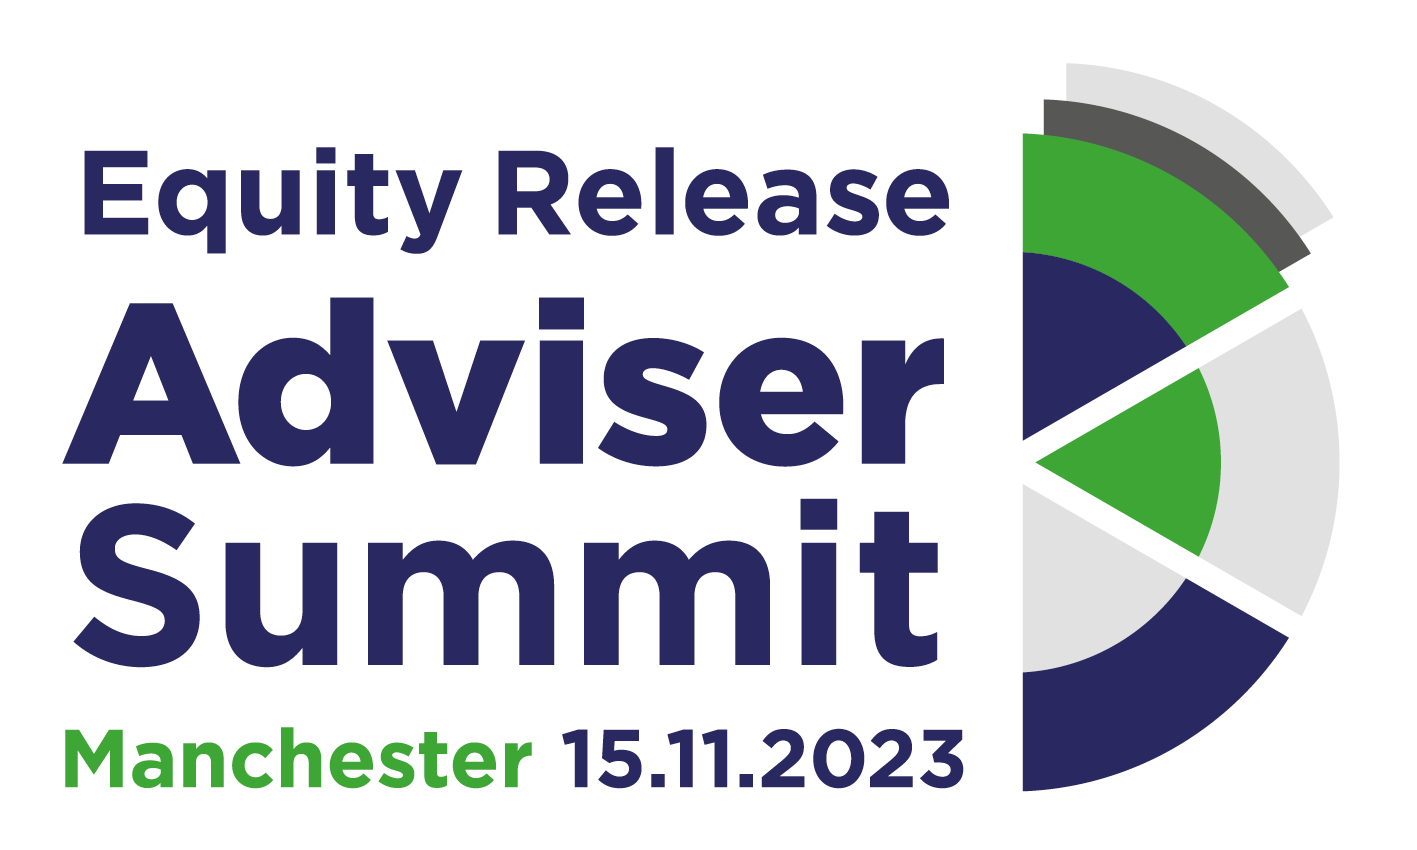 Equity Release Adviser Summit Manchester